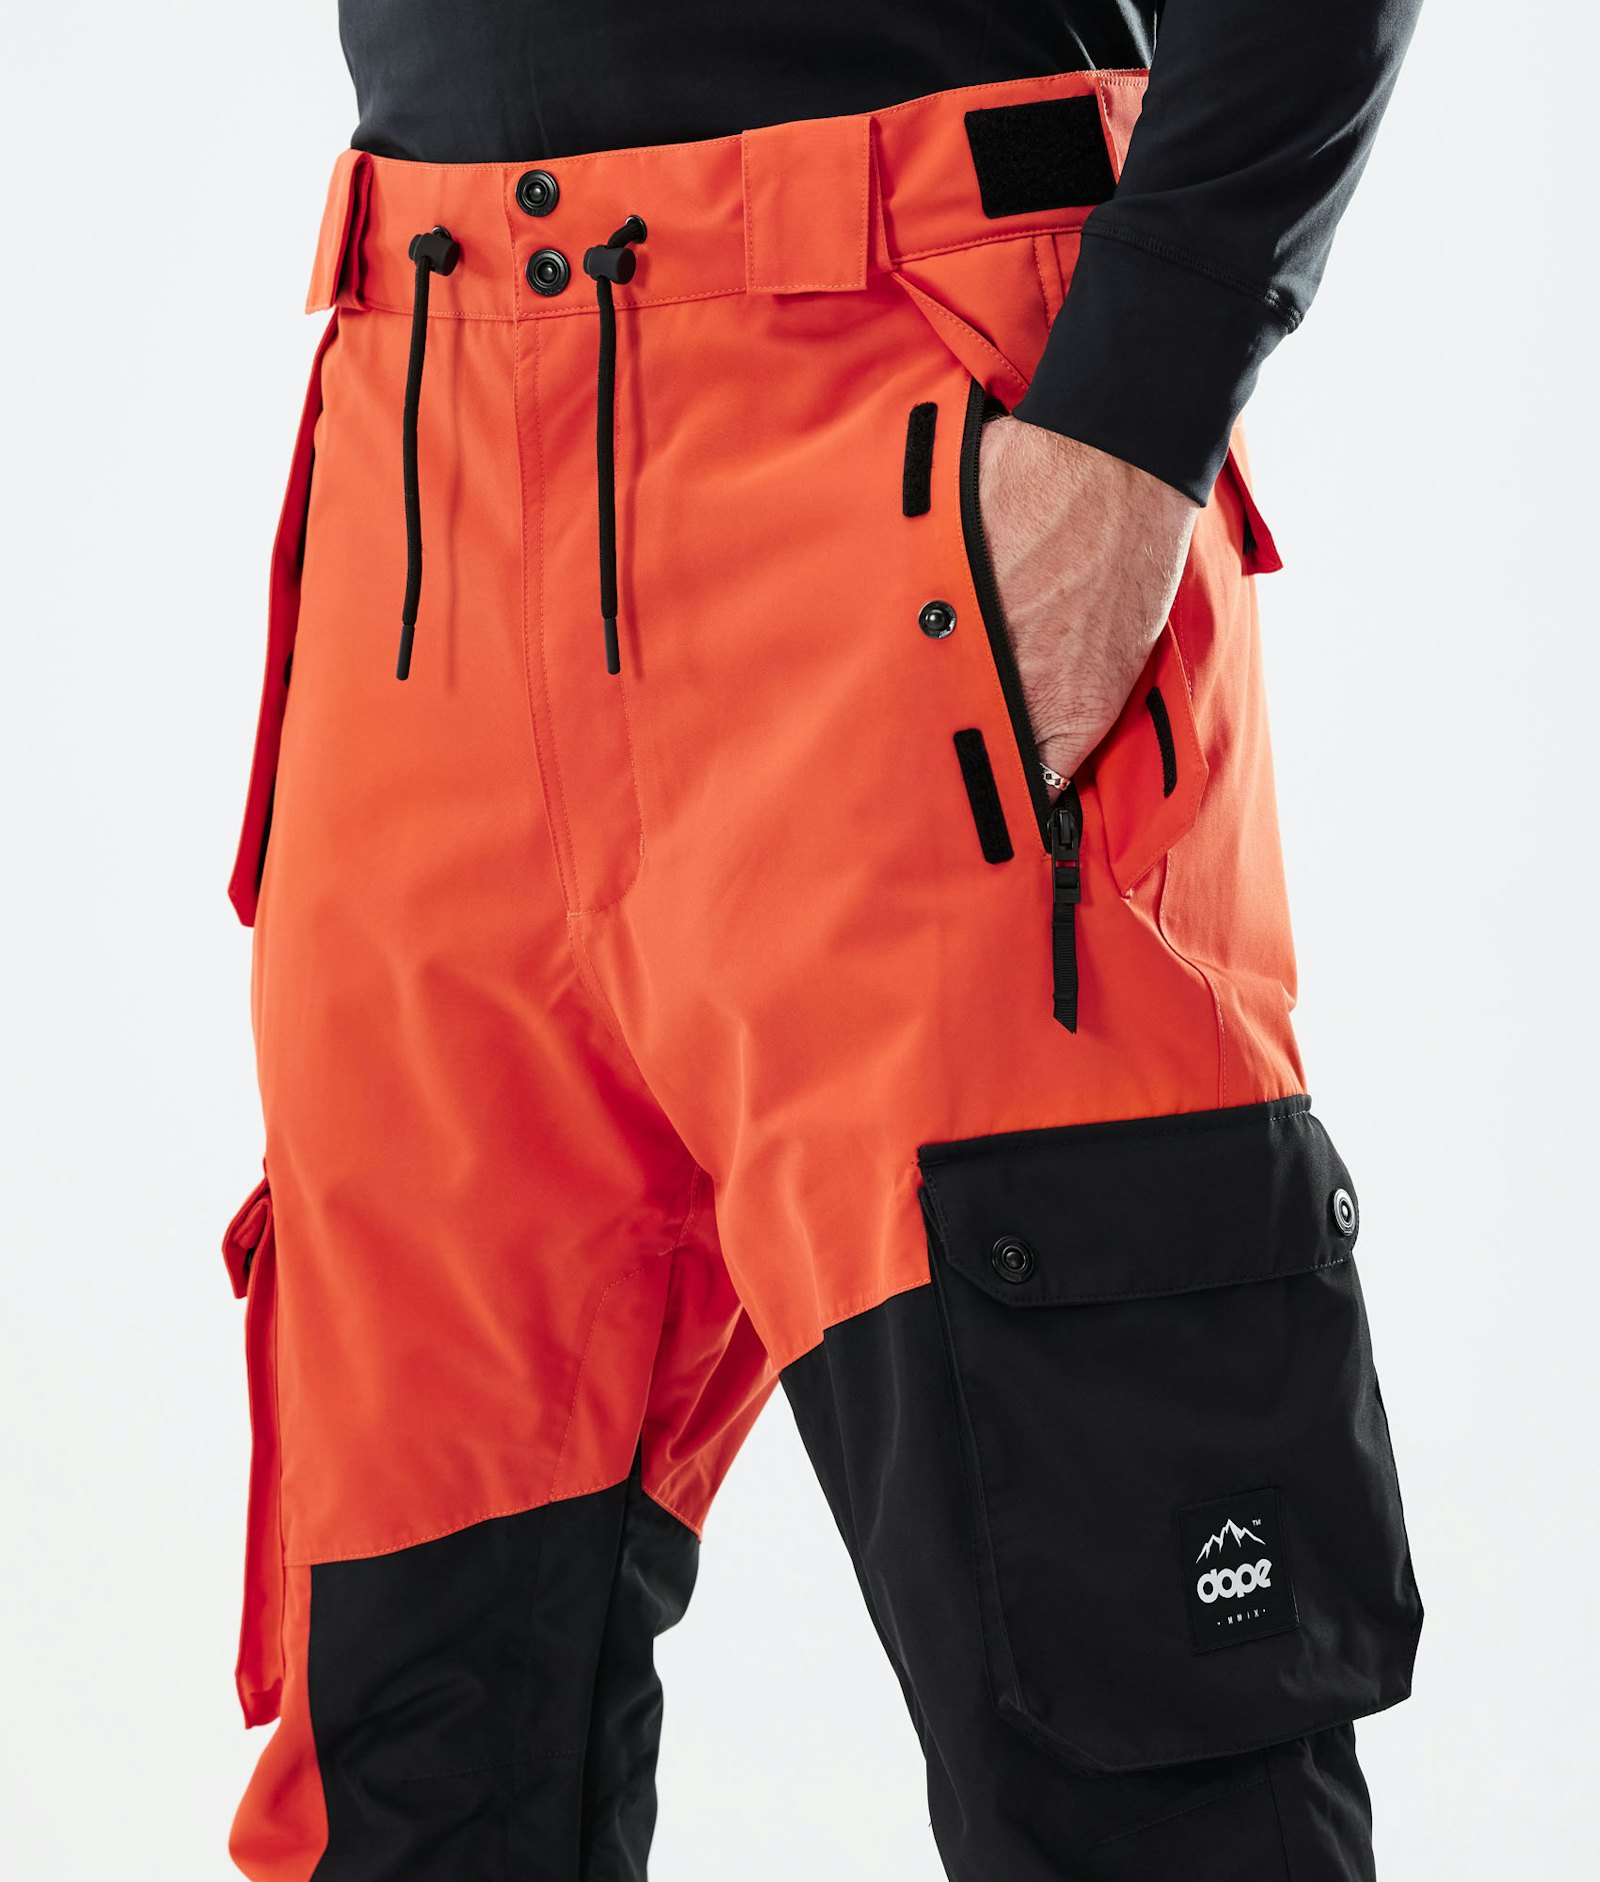 Adept 2021 Pantalon de Snowboard Homme Orange/Black